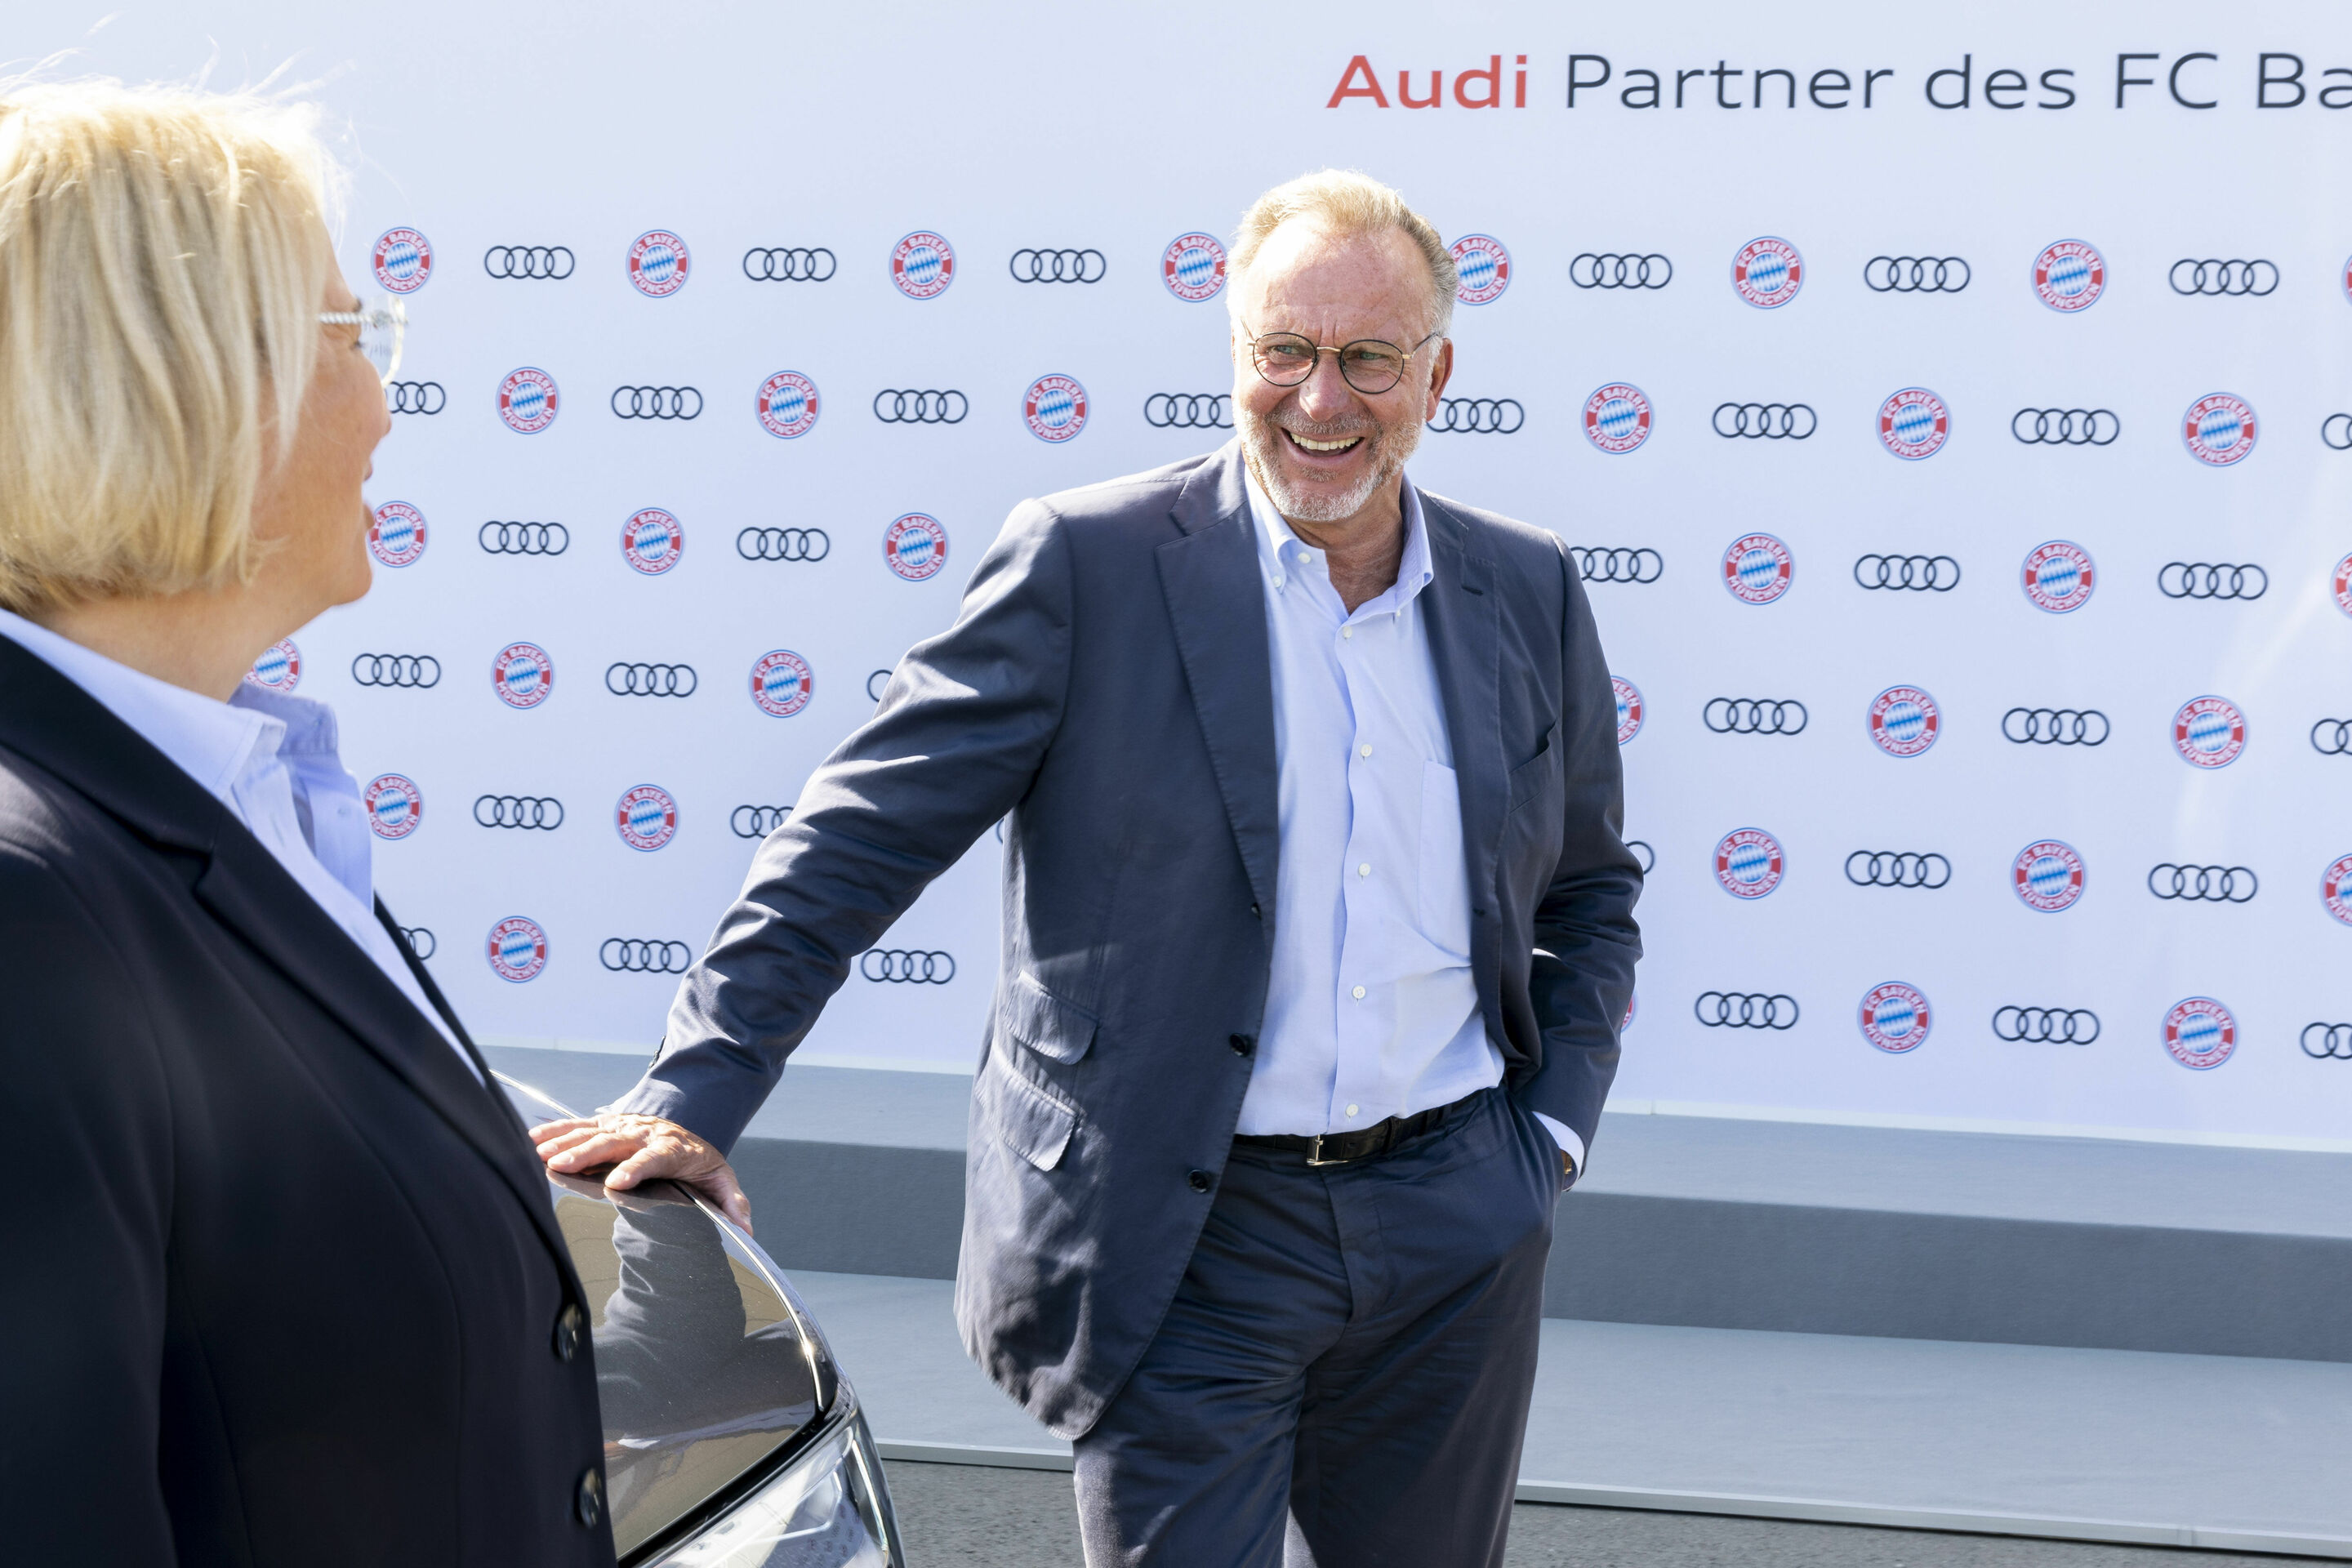 Audi electrifies FC Bayern Munich